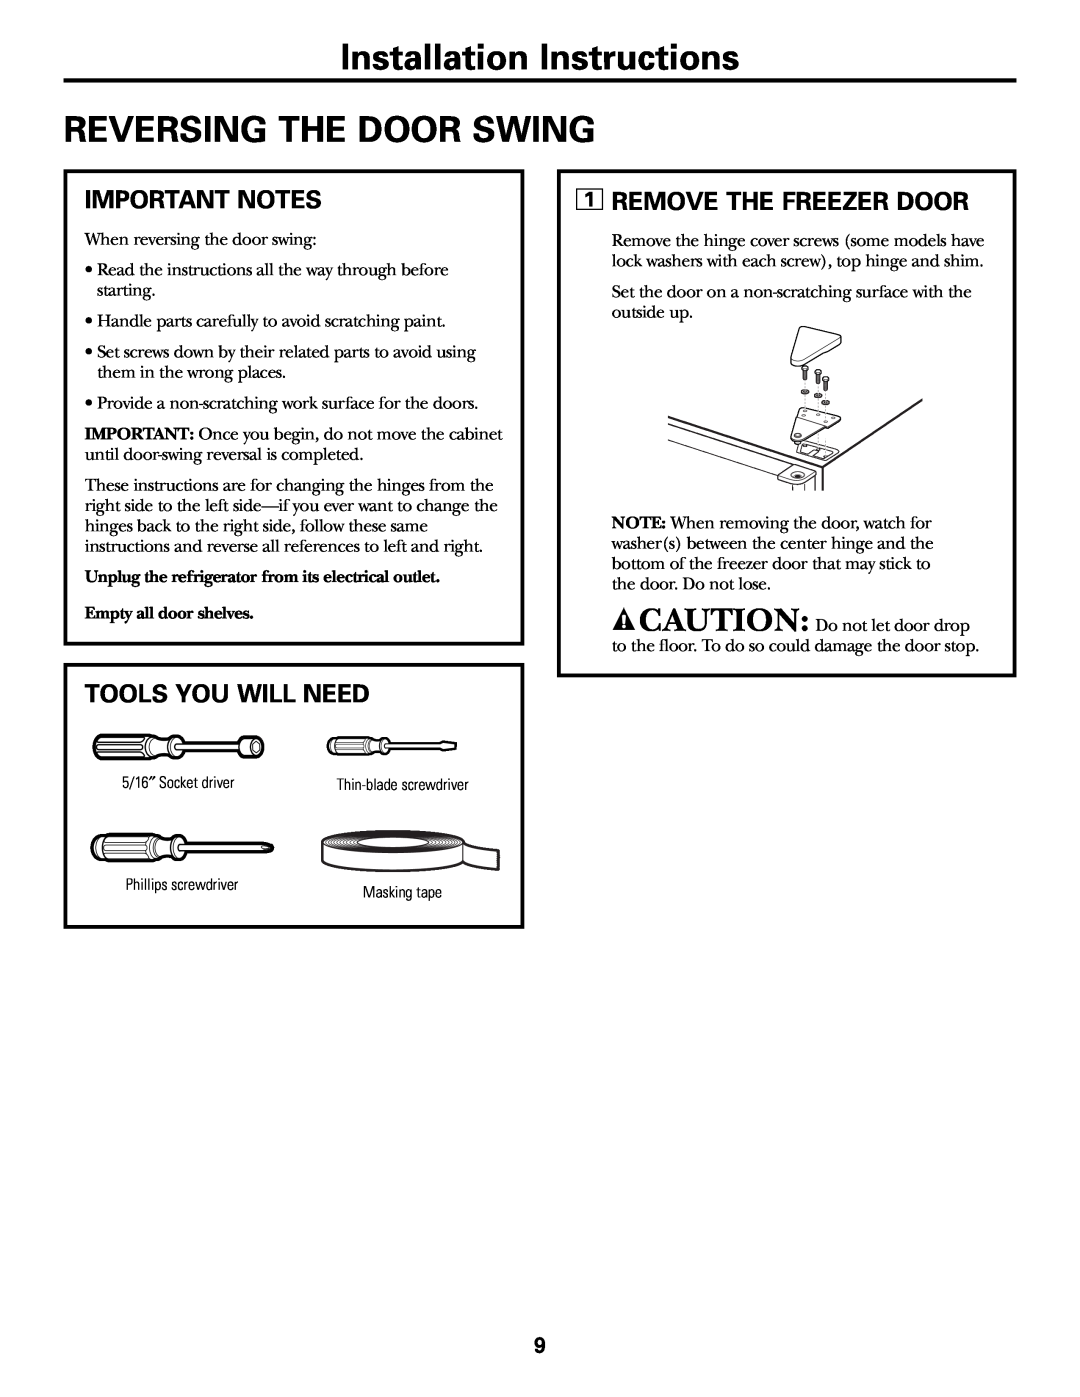 GE gtr10 Installation Instructions REVERSING THE DOOR SWING, Important Notes, Remove The Freezer Door, Tools You Will Need 